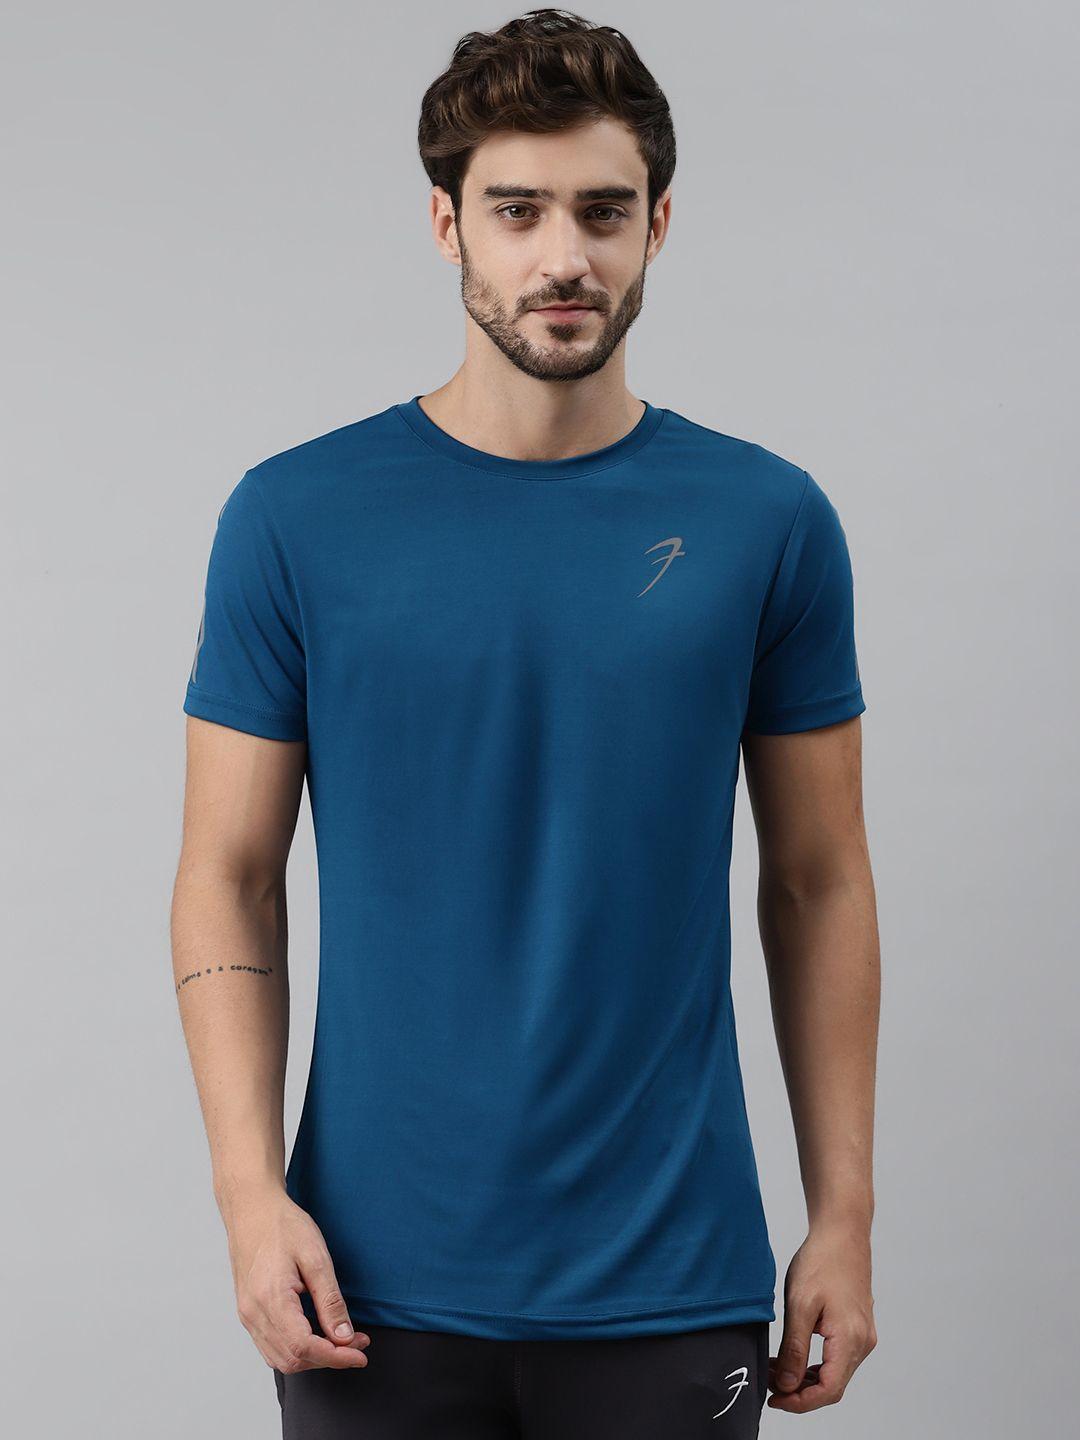 fuaark men teal blue slim fit solid round neck training t-shirt